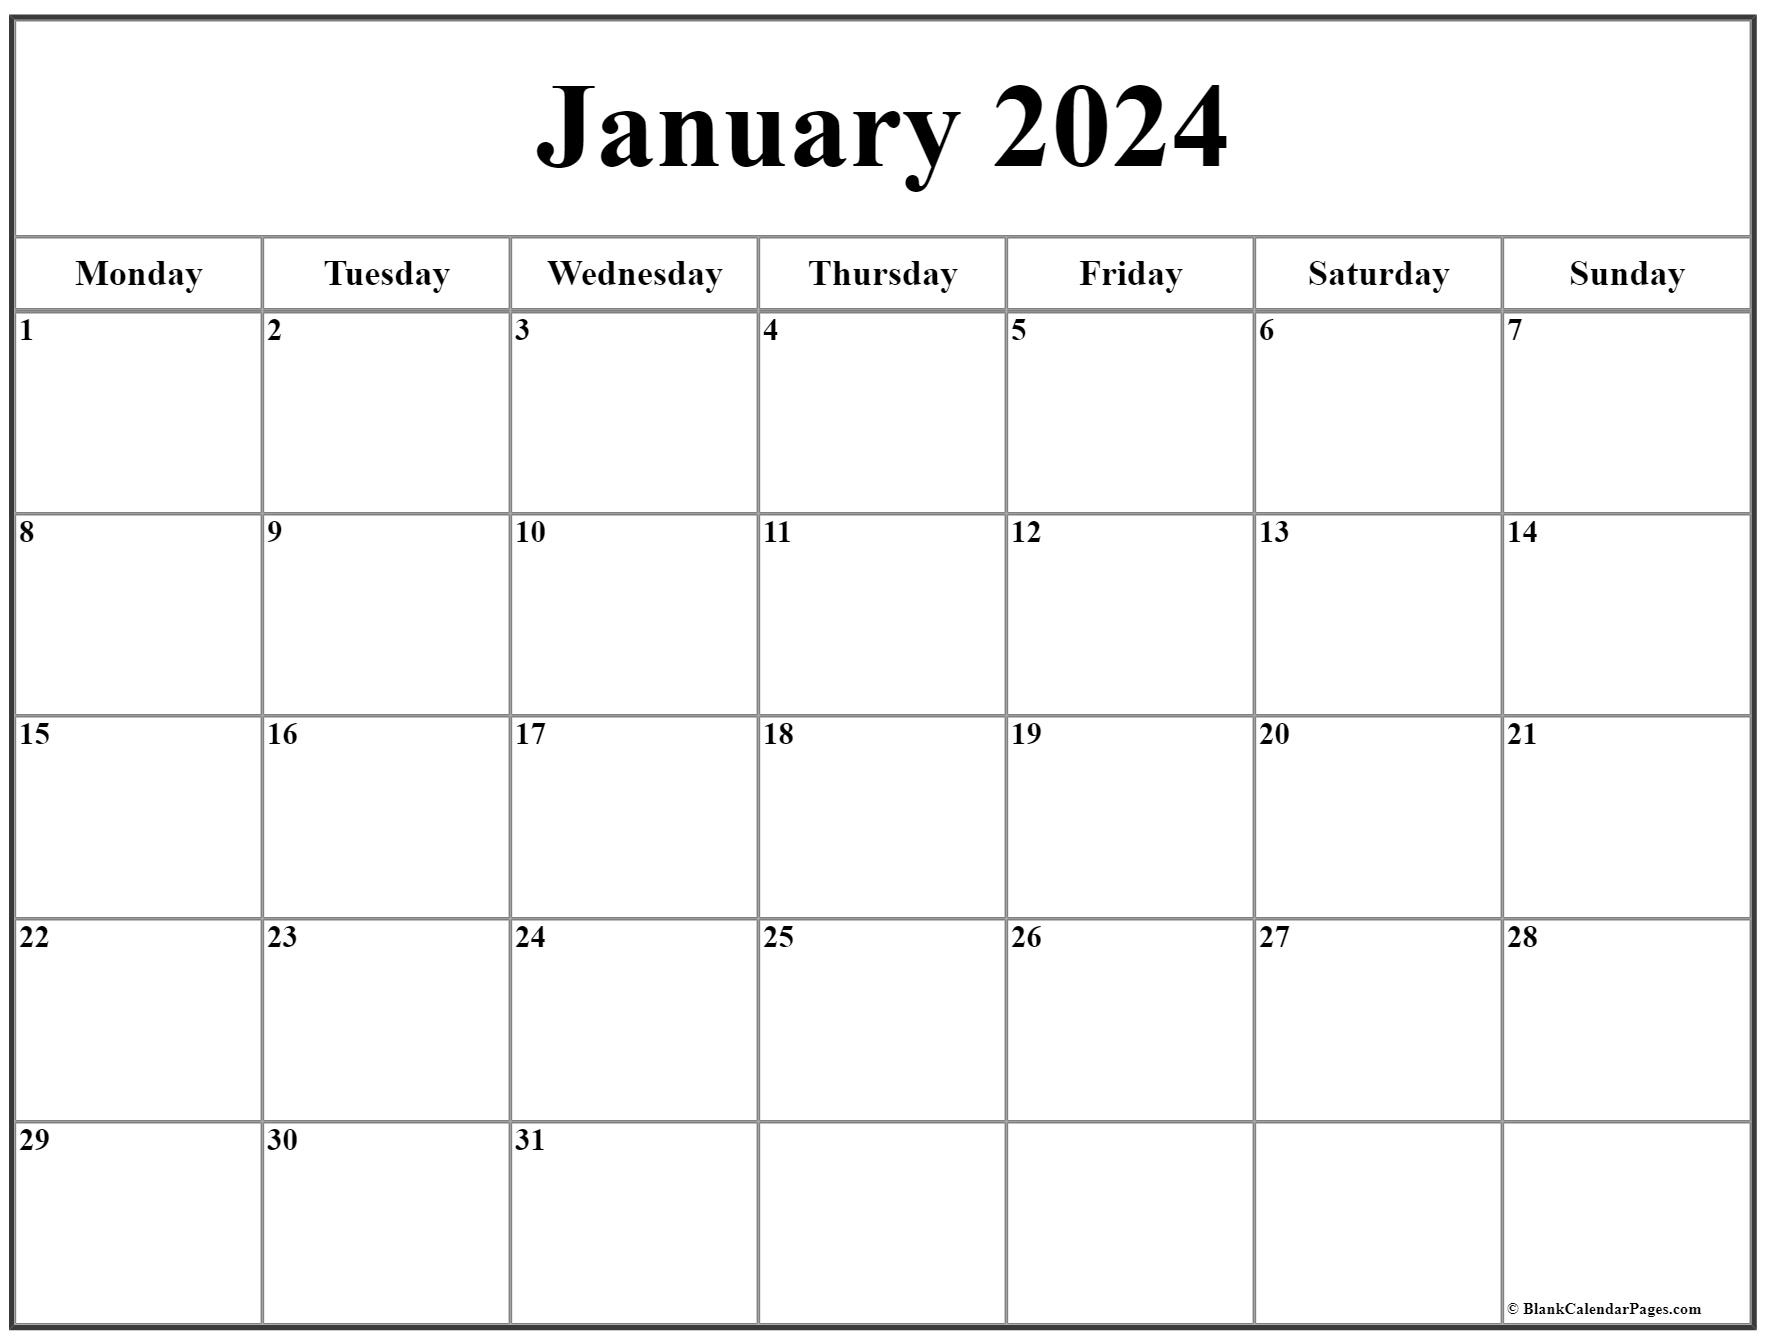 January 2024 Monday Calendar | Monday To Sunday | Printable Calendar January 2024 Monday Start